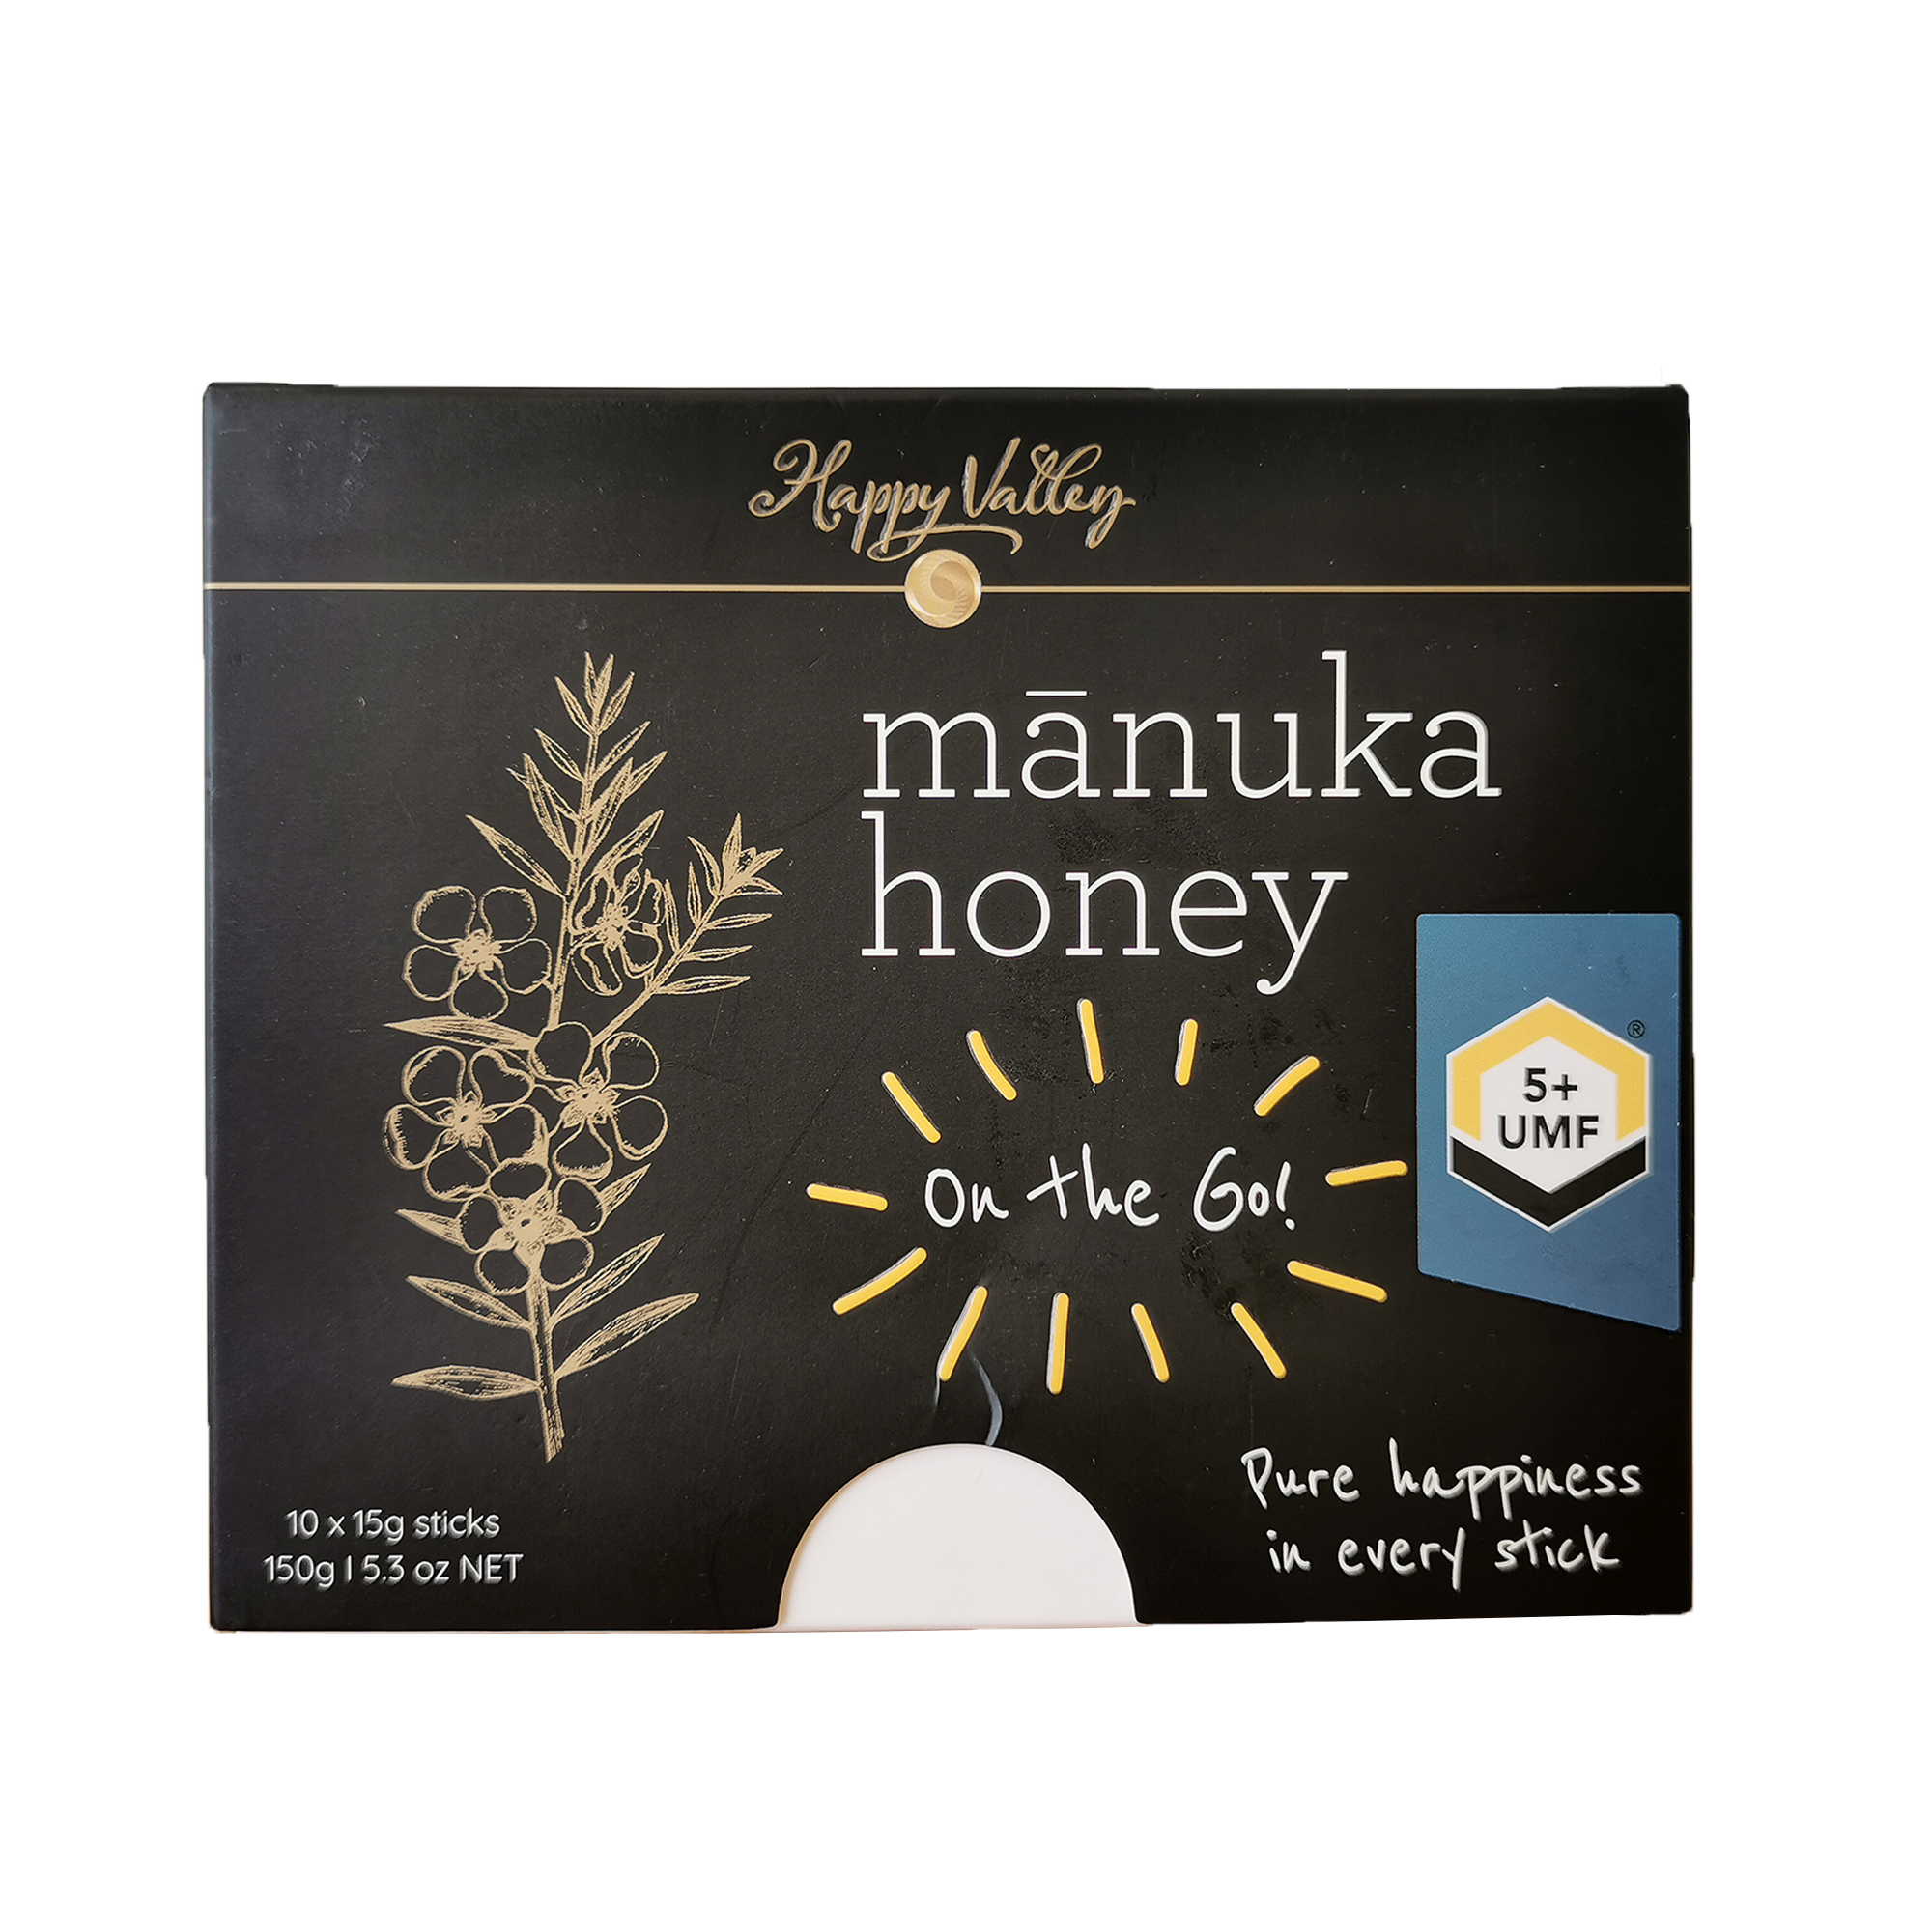 On-the-Go UMF 5+ Mānuka Honey Packets